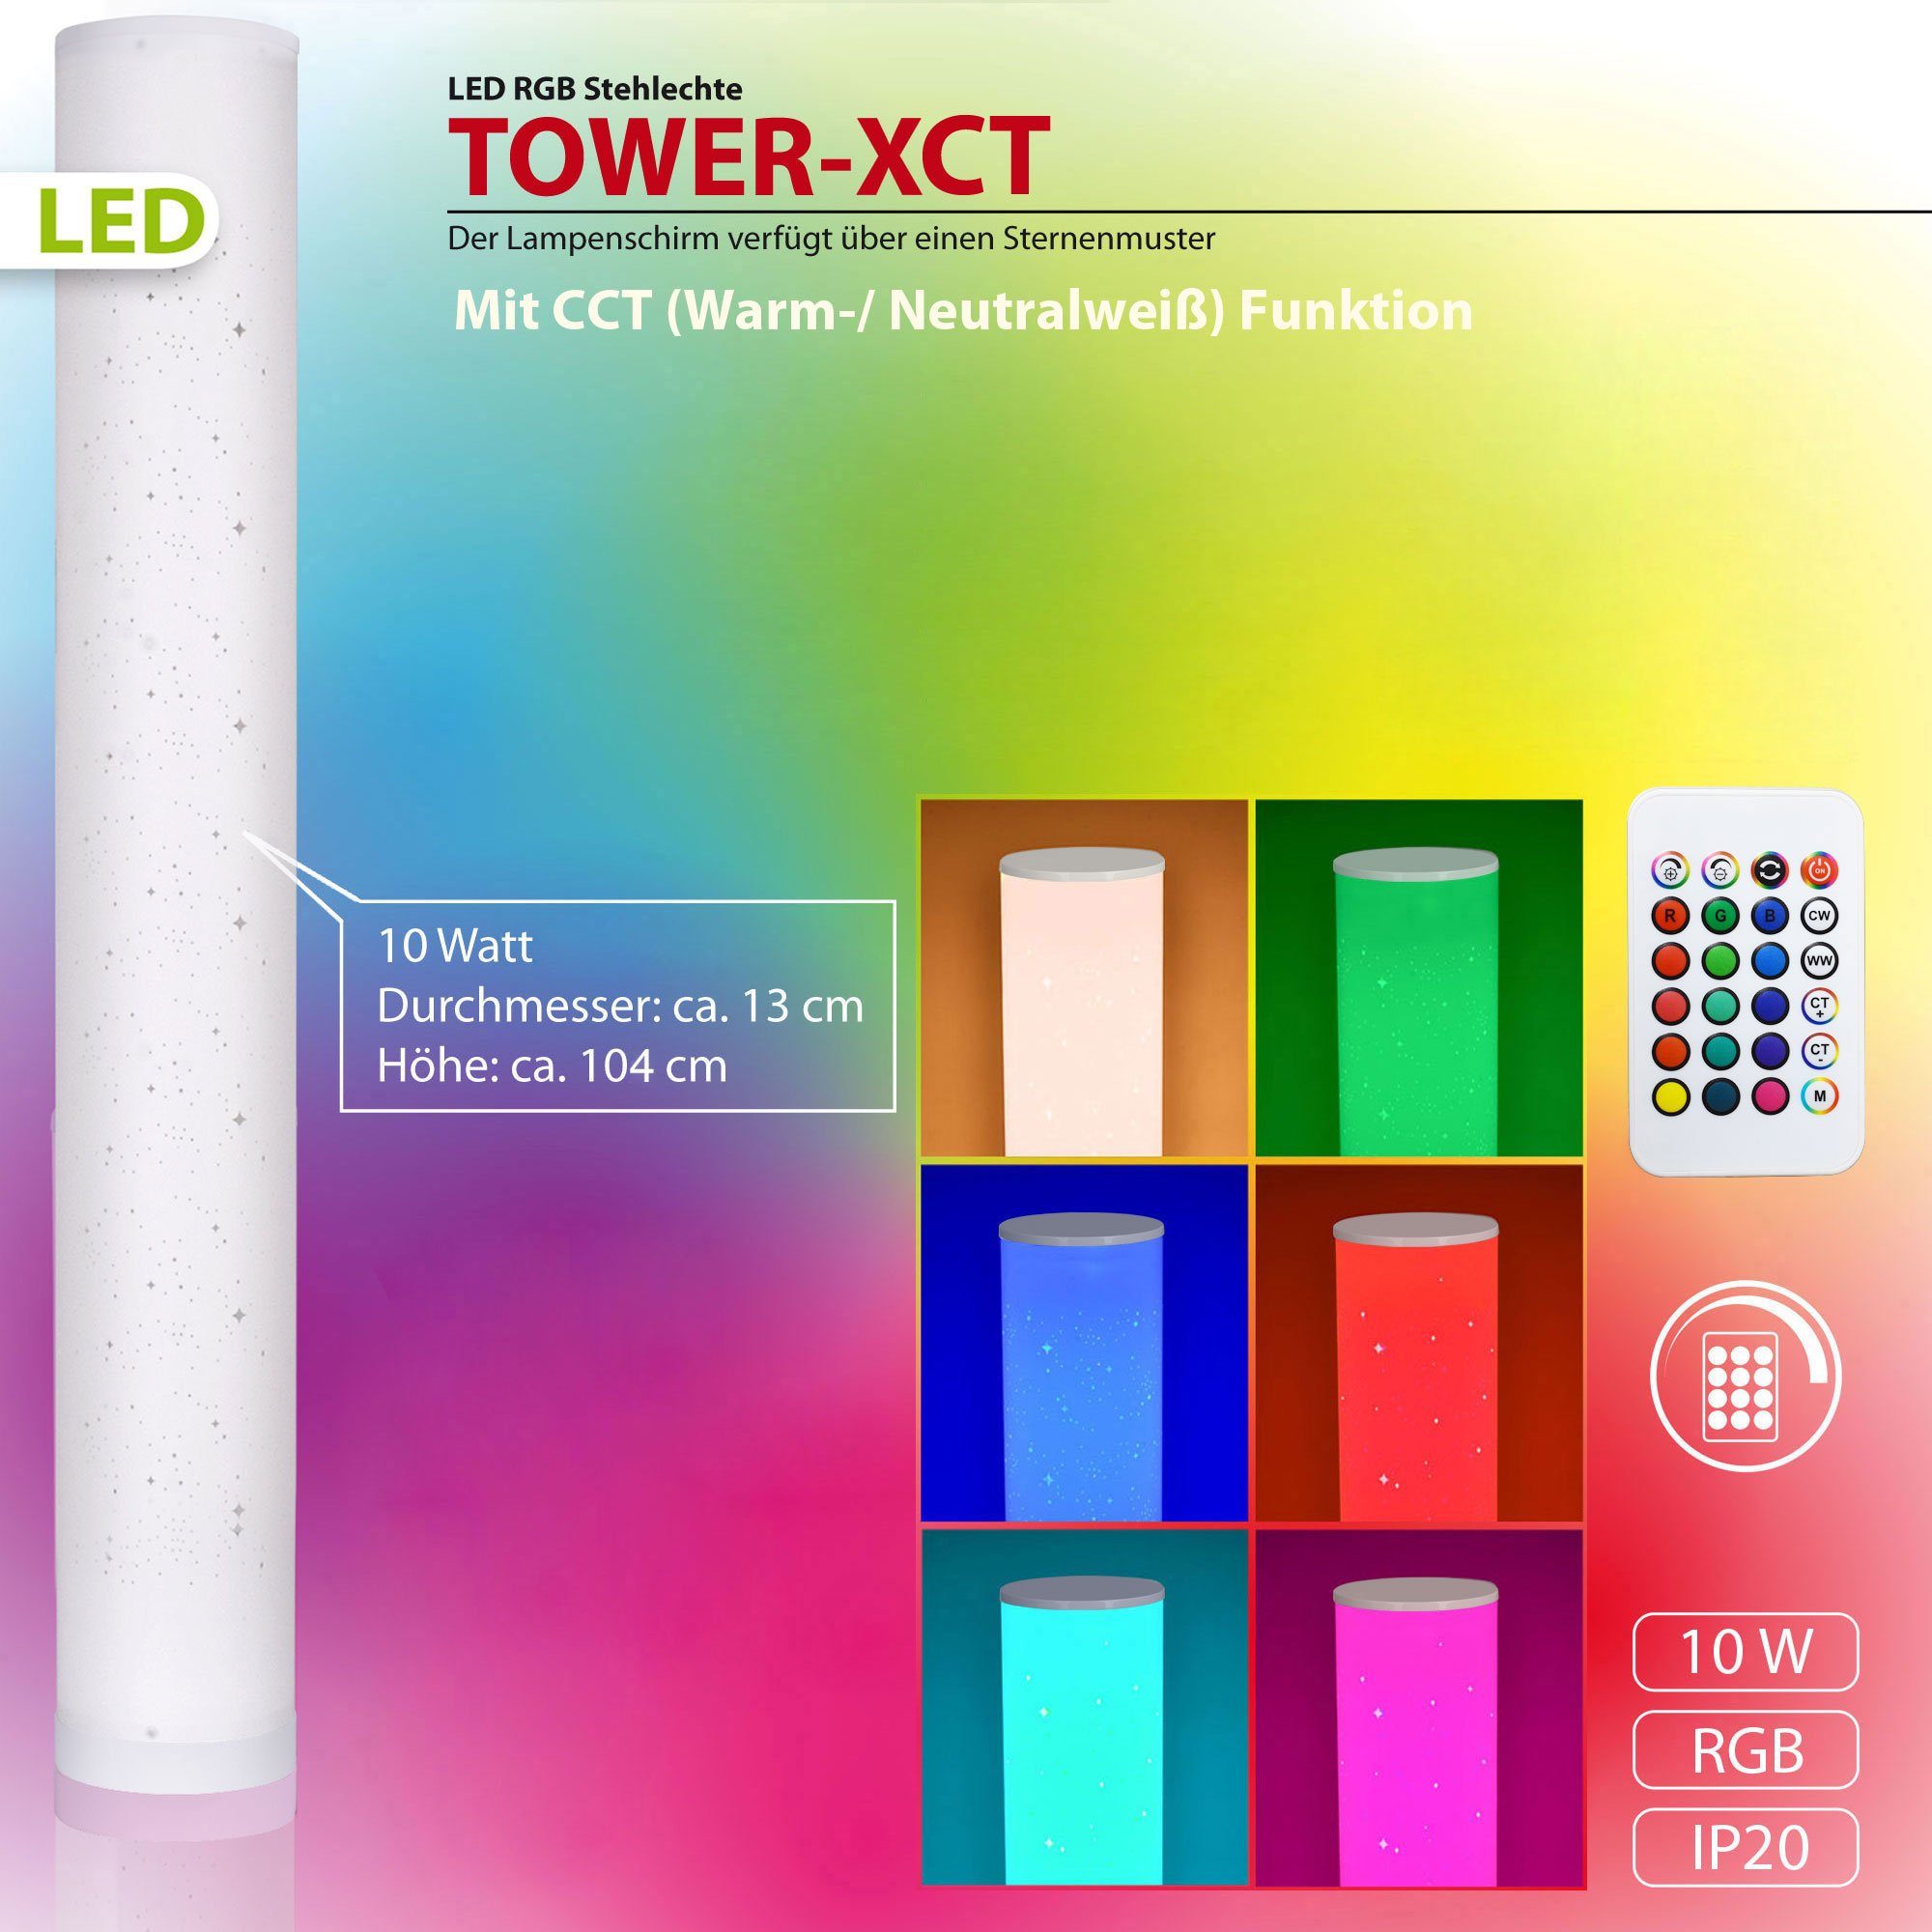 Maxkomfort LED Stehlampe Tower-XCT, LED fest integriert, Farbwechsler, RGB, Stehleuchte, Eckleuchte, Corner, RGB, Dimmbar, Music Sync, DIY, LED, Lichtsäule, Farbwechsel, Farbig, Fernbedienung